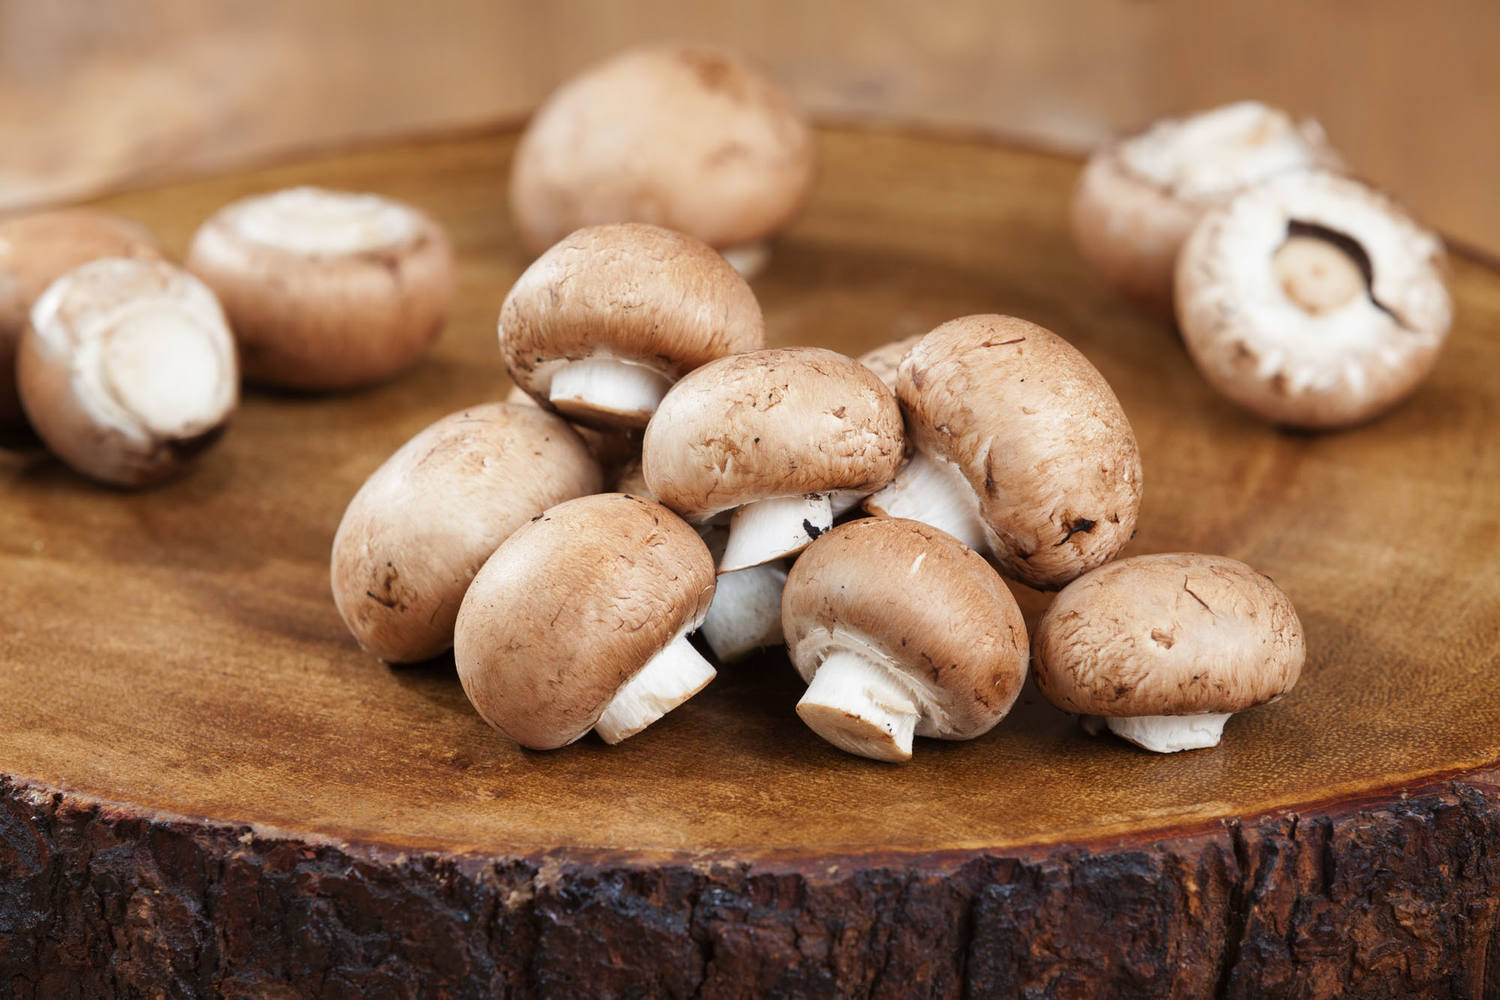 Kastanje champignons schijven 1kg. kist 4 stuks 3